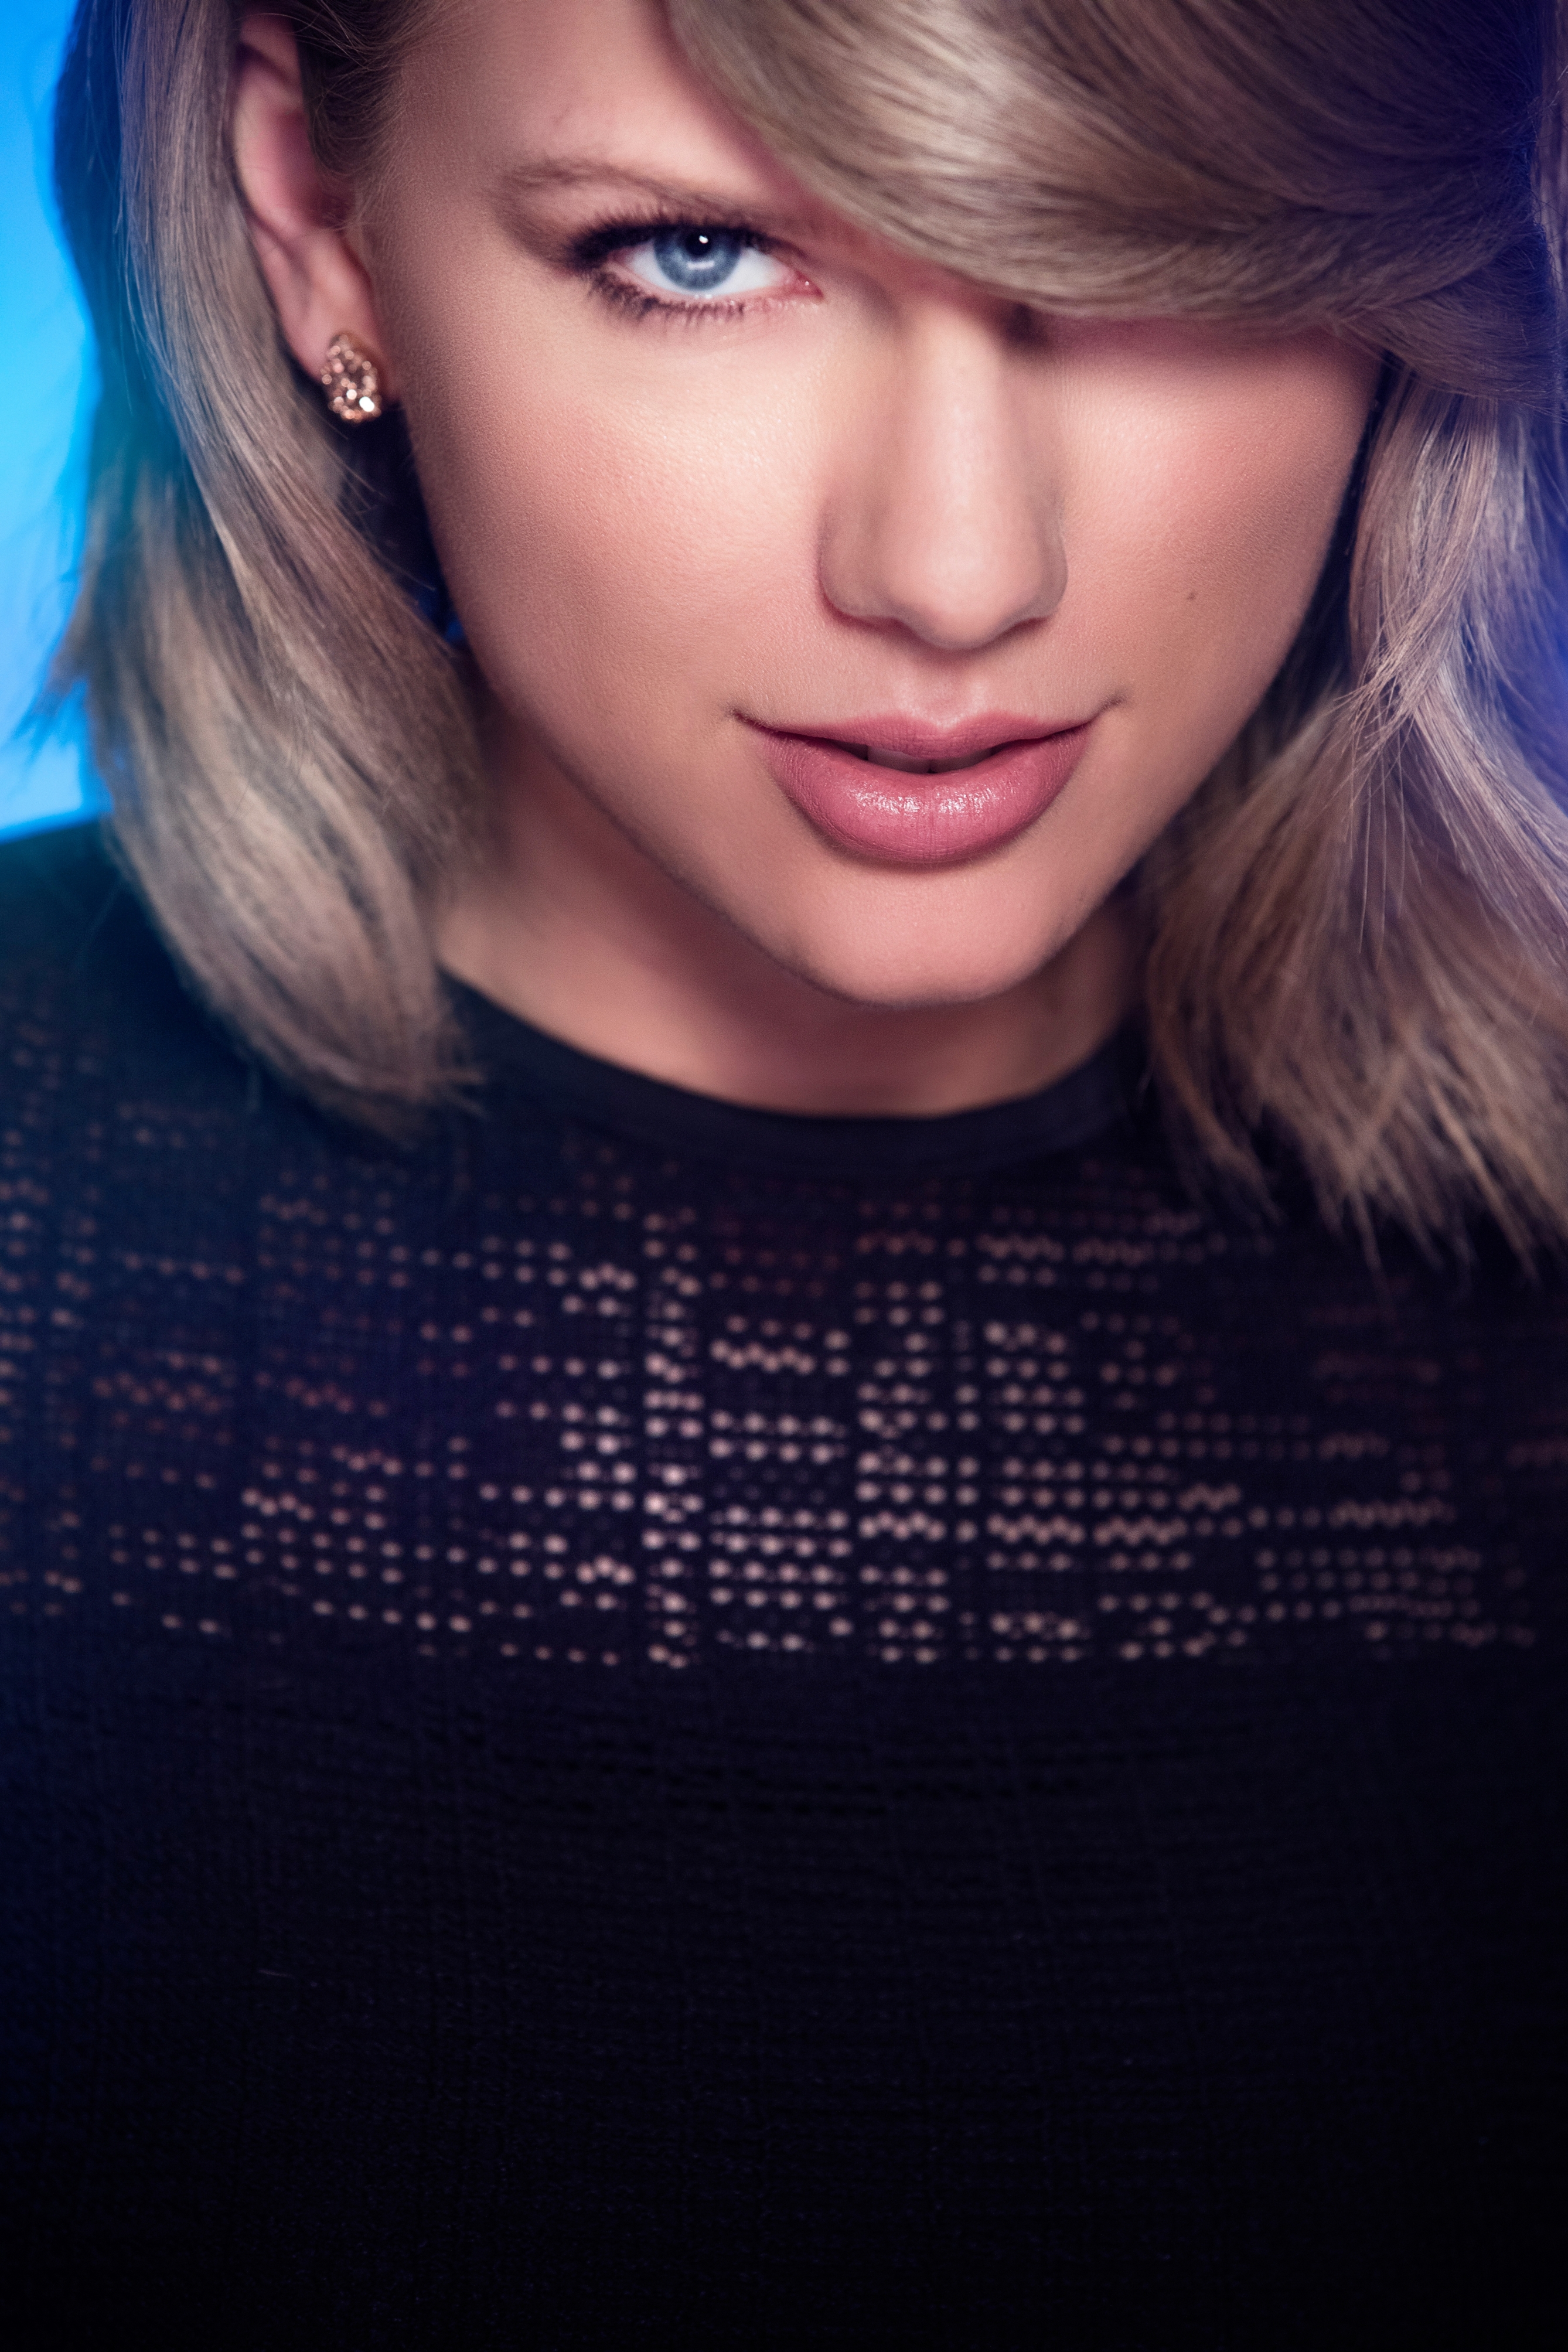 People 2676x4014 Taylor Swift singer blonde blue eyes women closeup portrait display